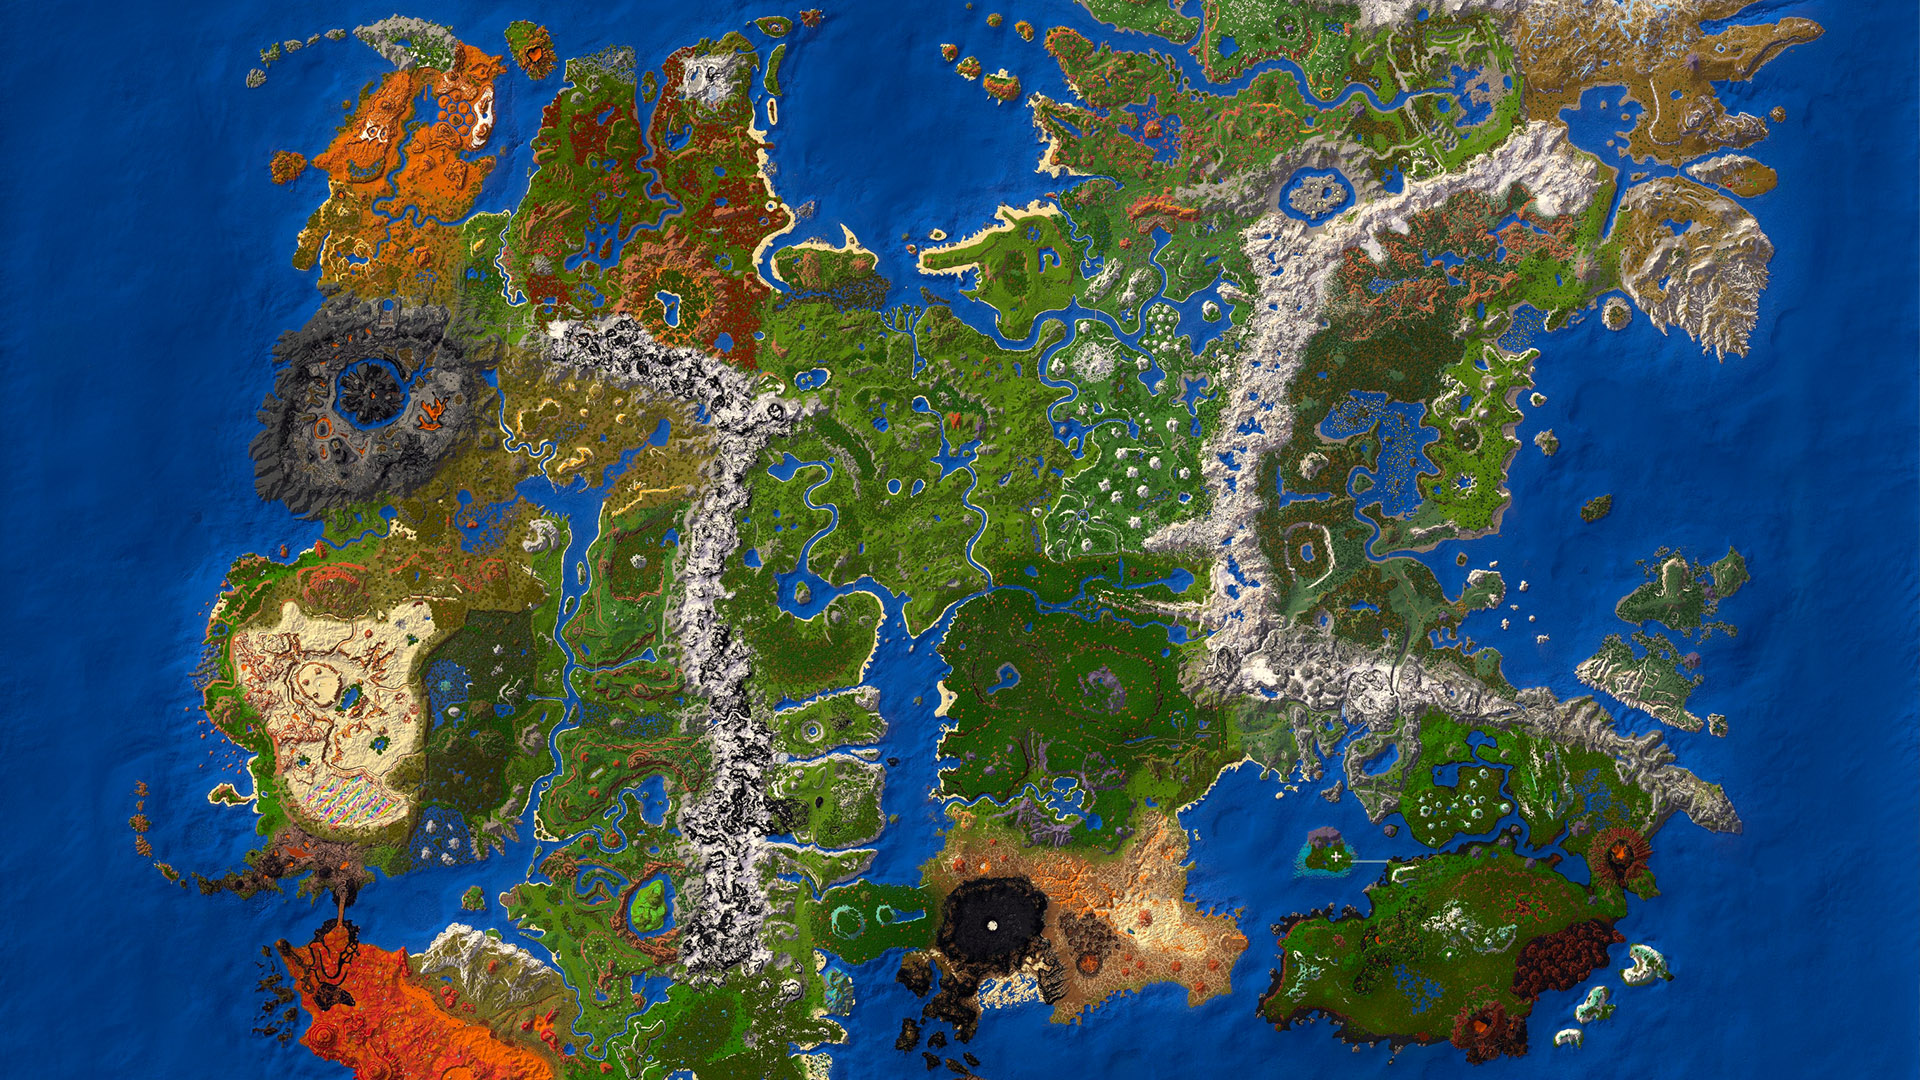 Limited World Survival Minecraft Map